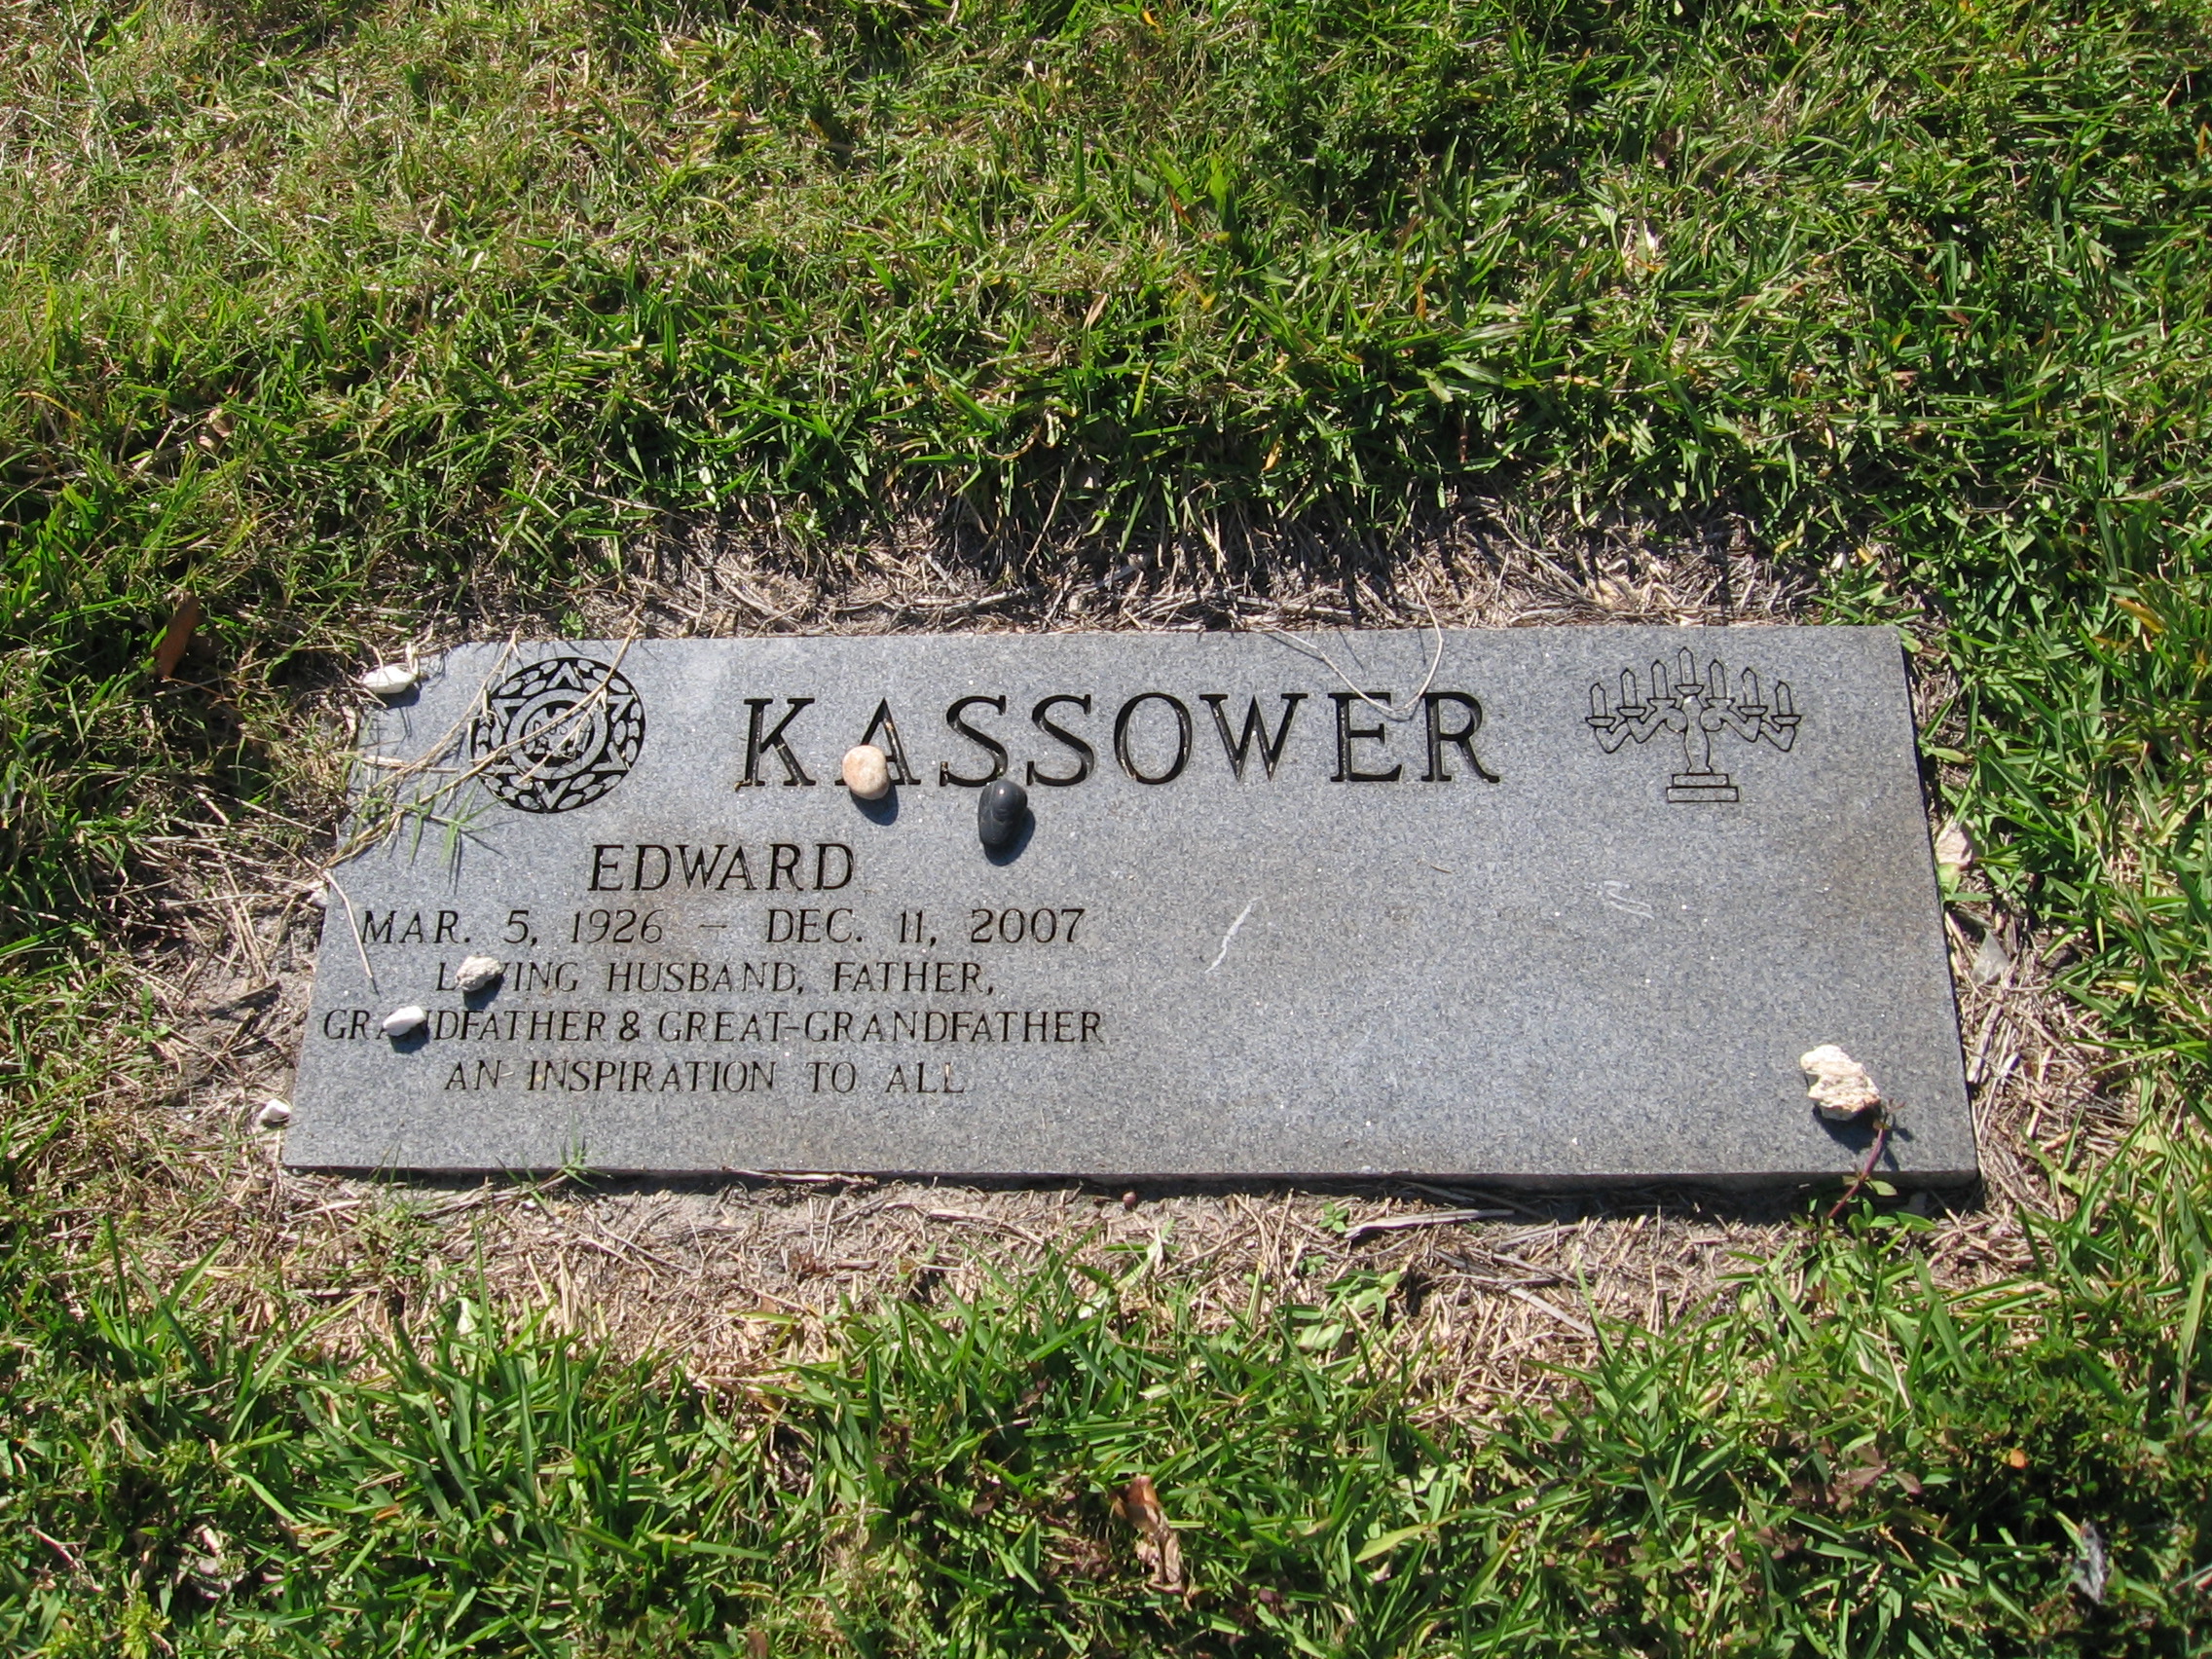 Edward Kassower